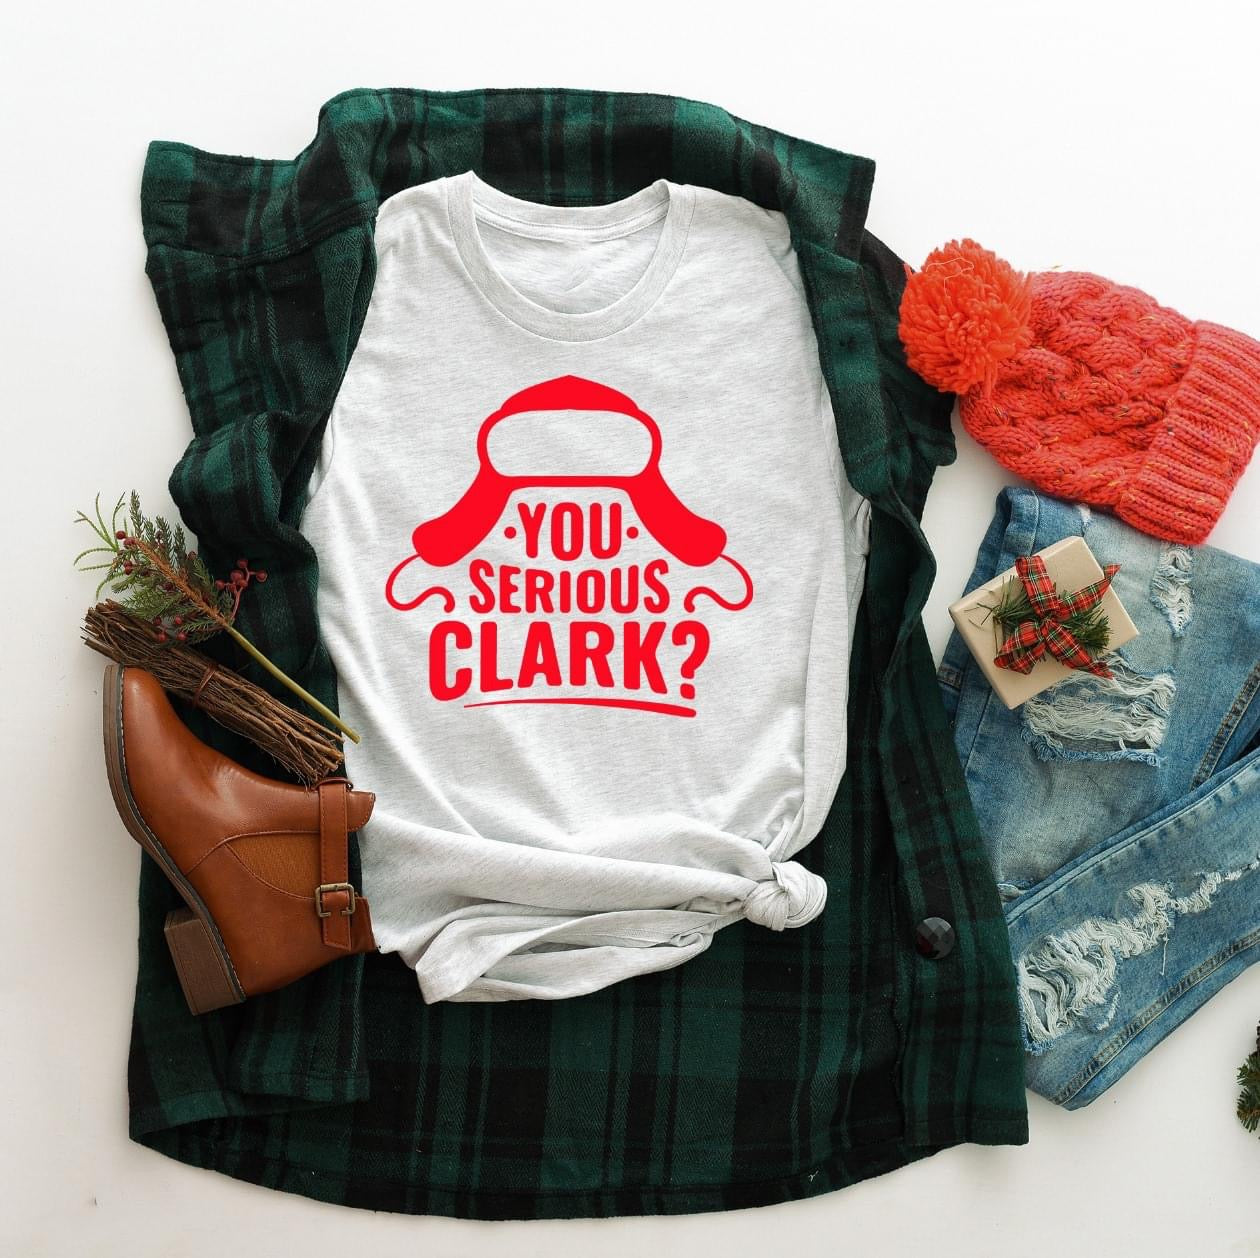 PREORDER - You Serious Clark? Christmas Tee